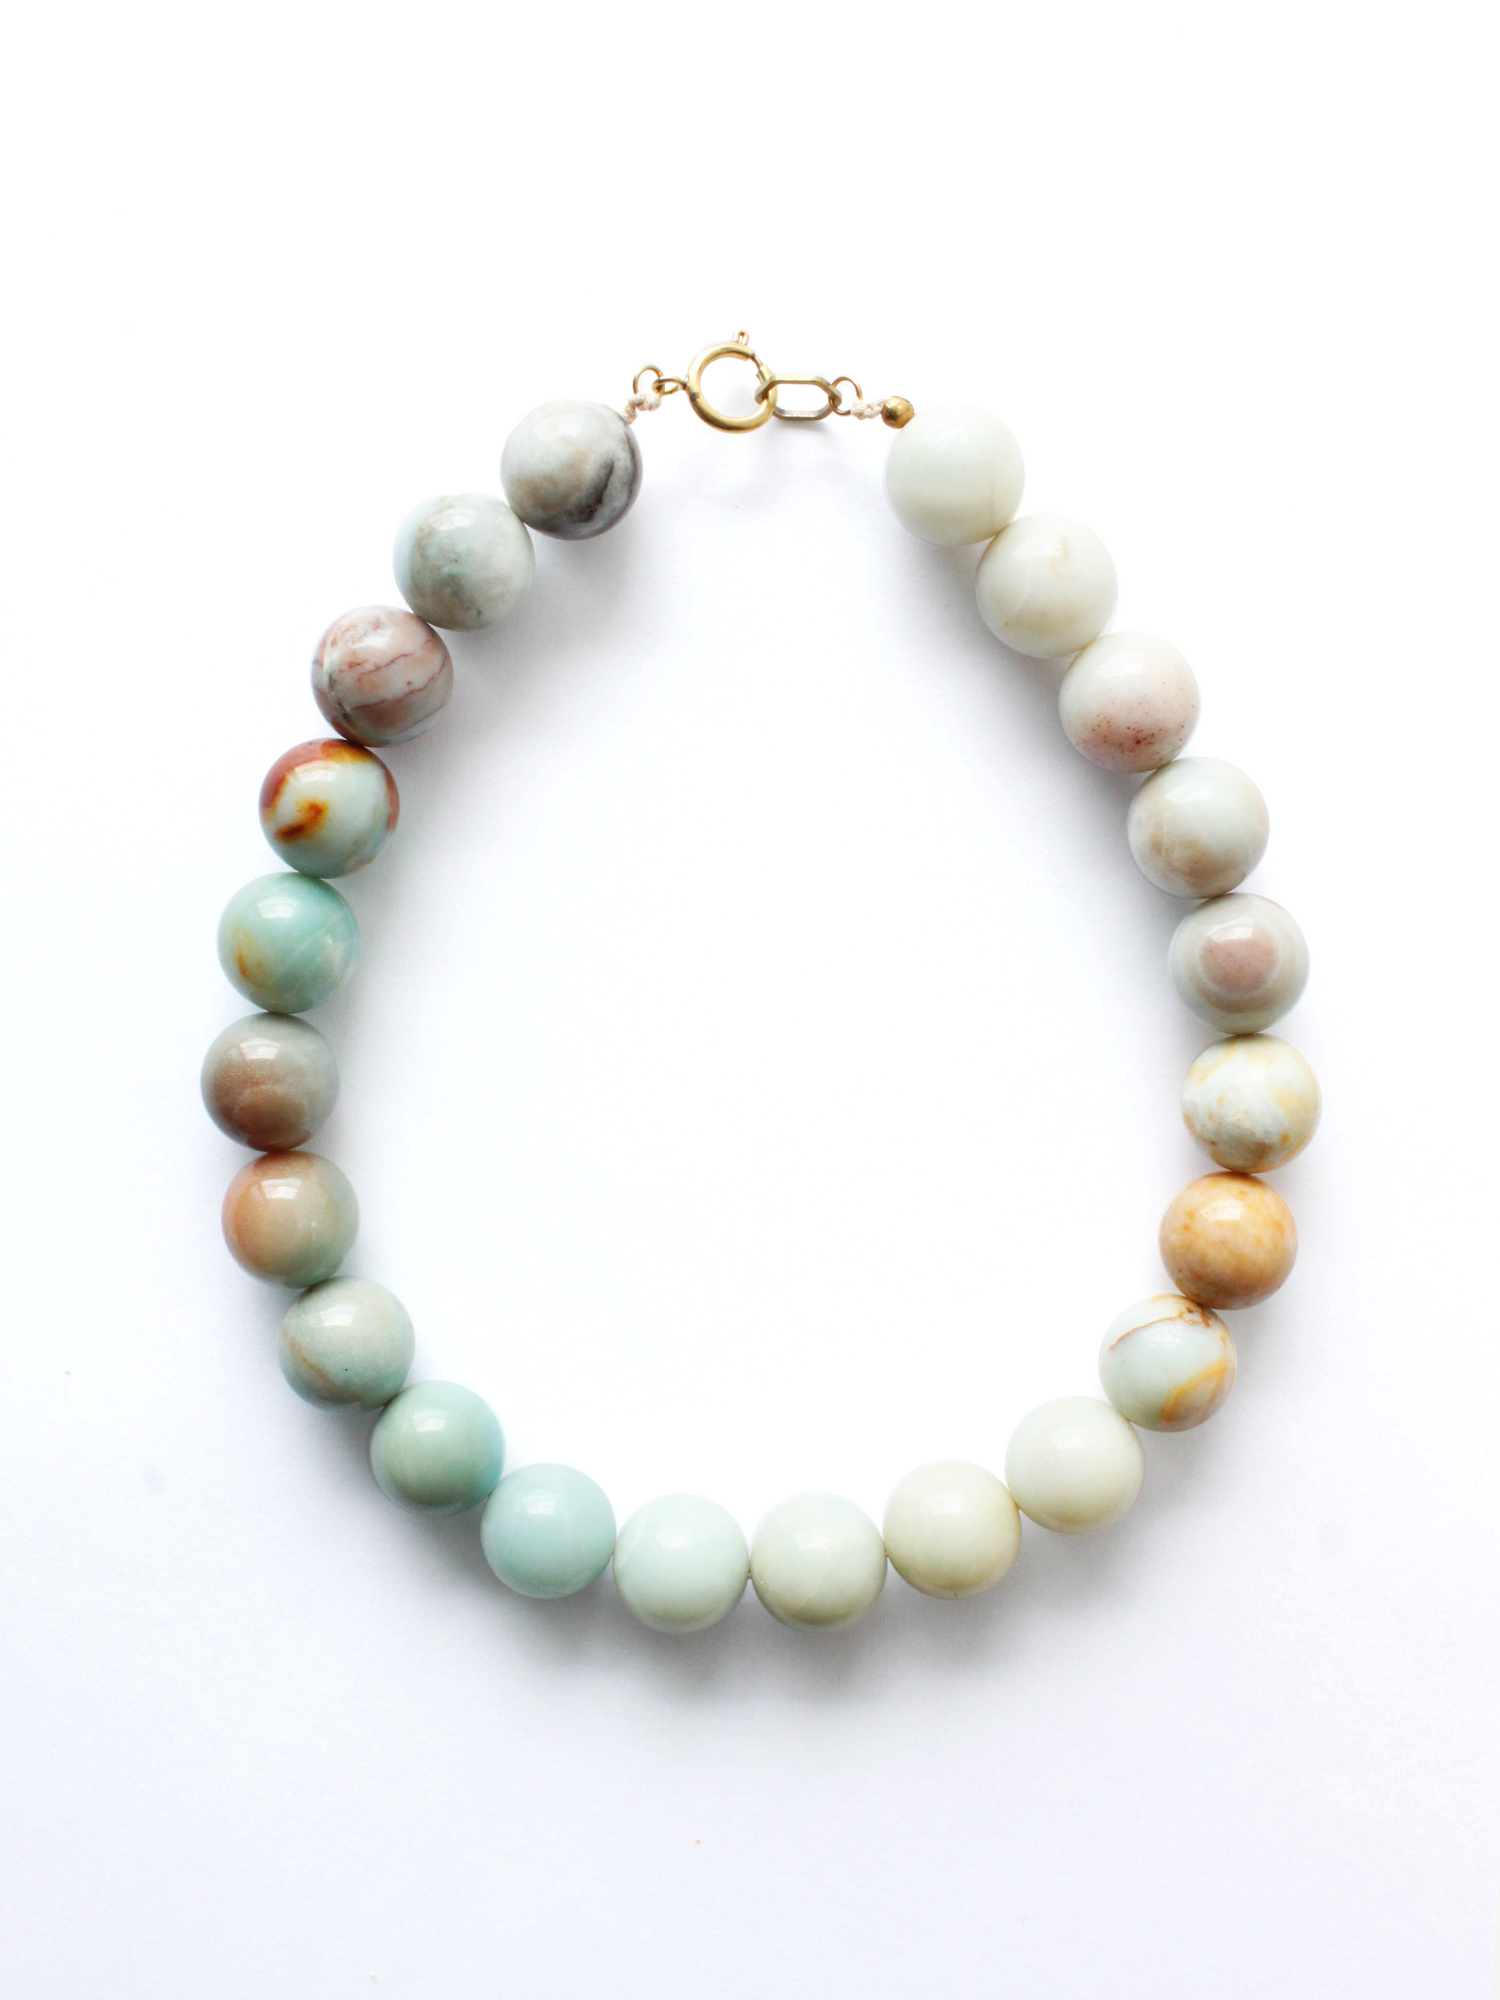 Stone Necklace - Amazonite 18mm